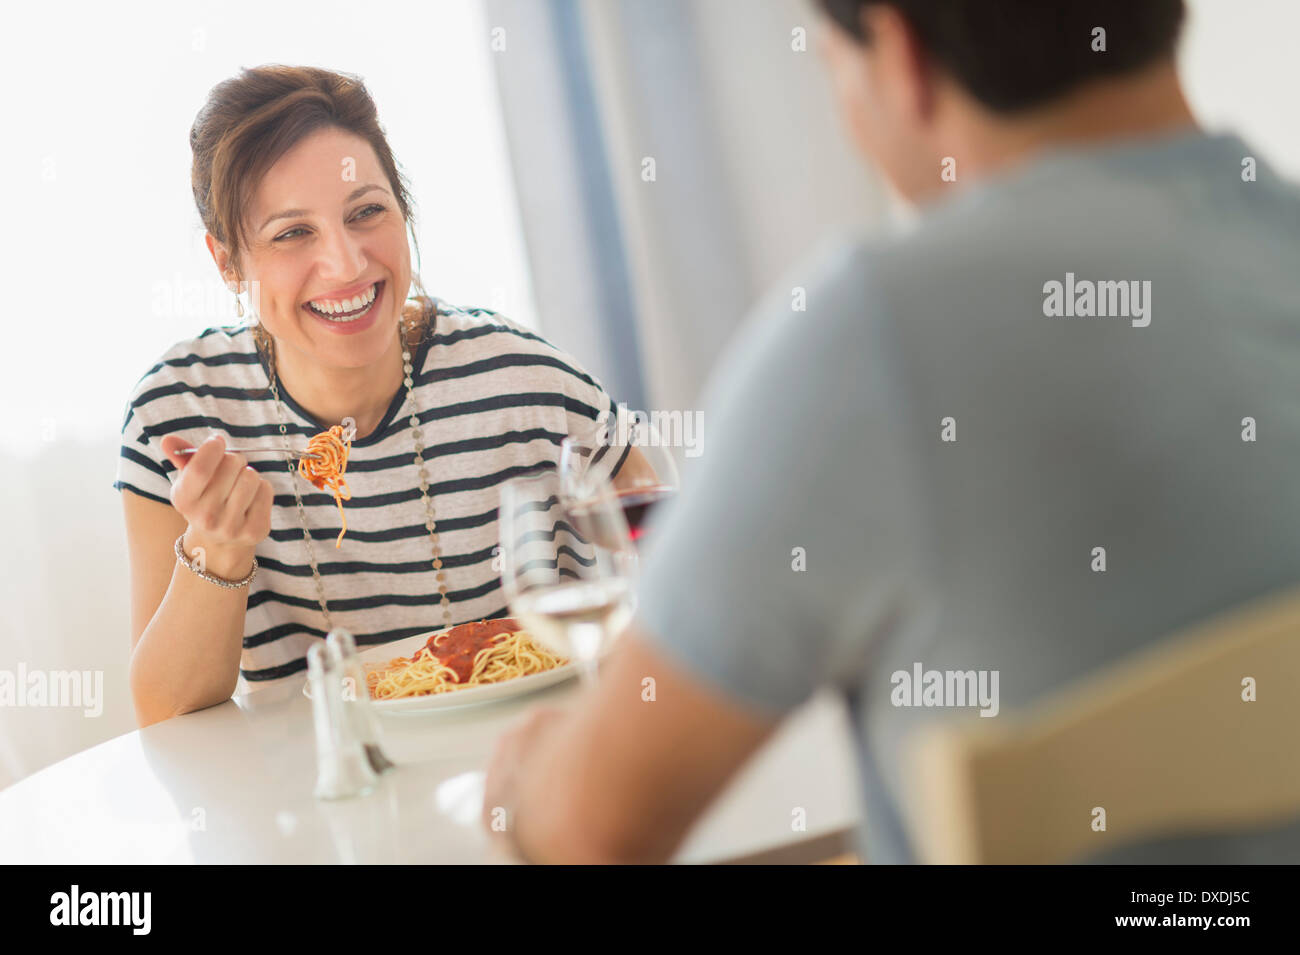 Couple eating spaghetti Stock Photo